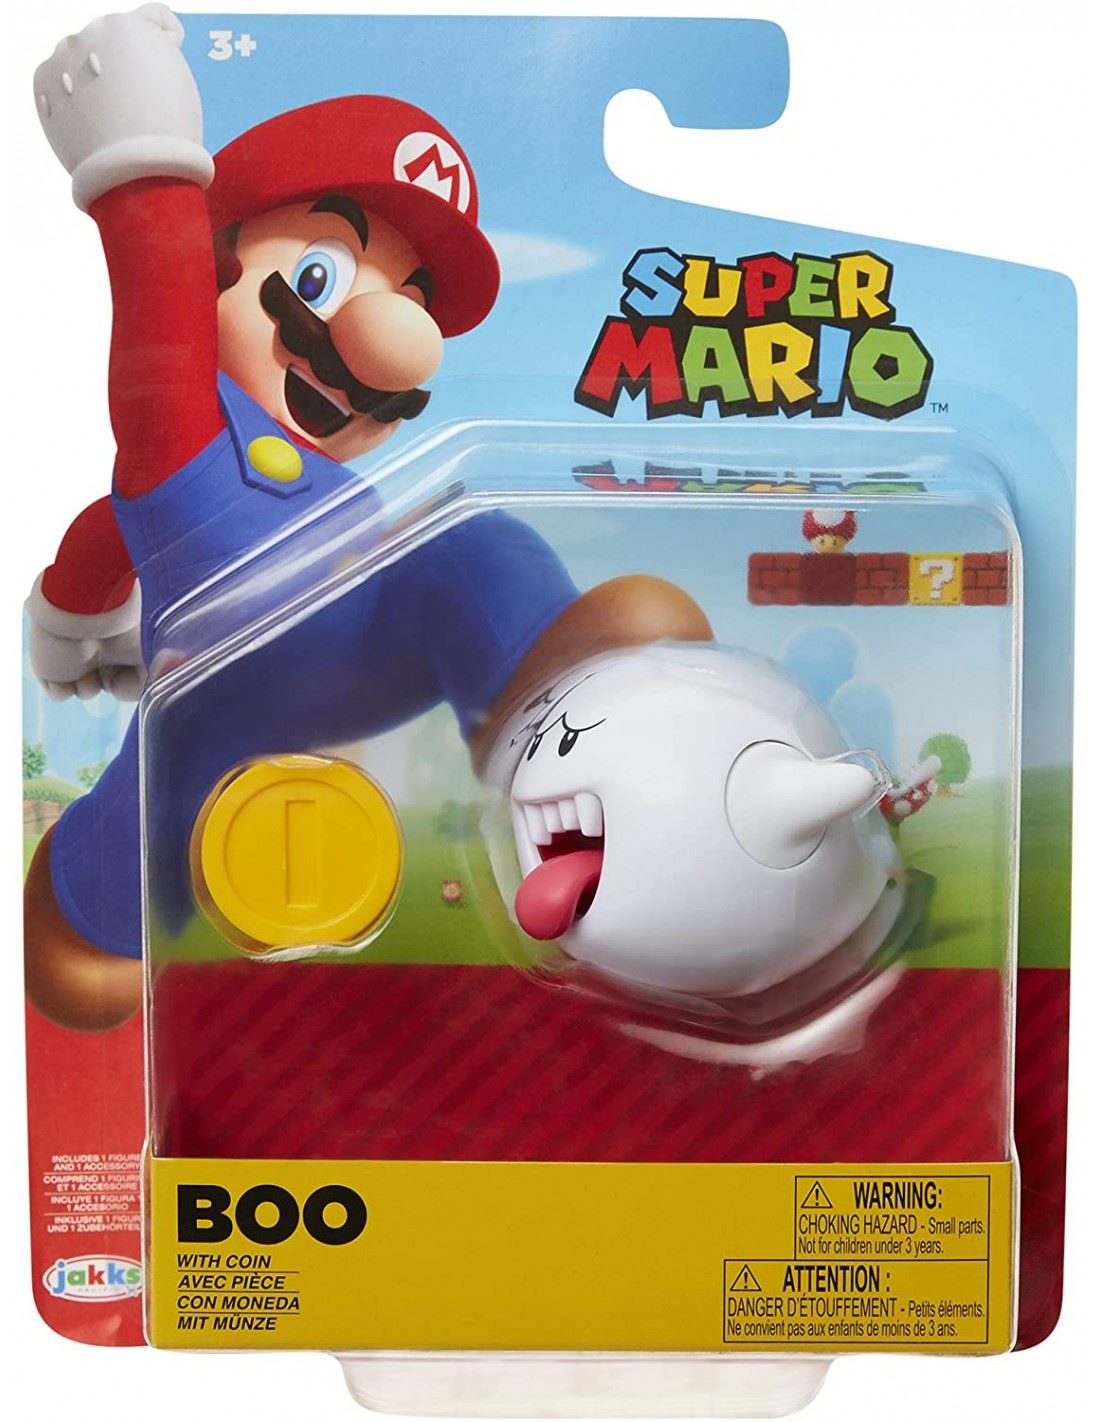 BOO with Coin Super Mario Jakks Action Figure 4"/10cm 72684